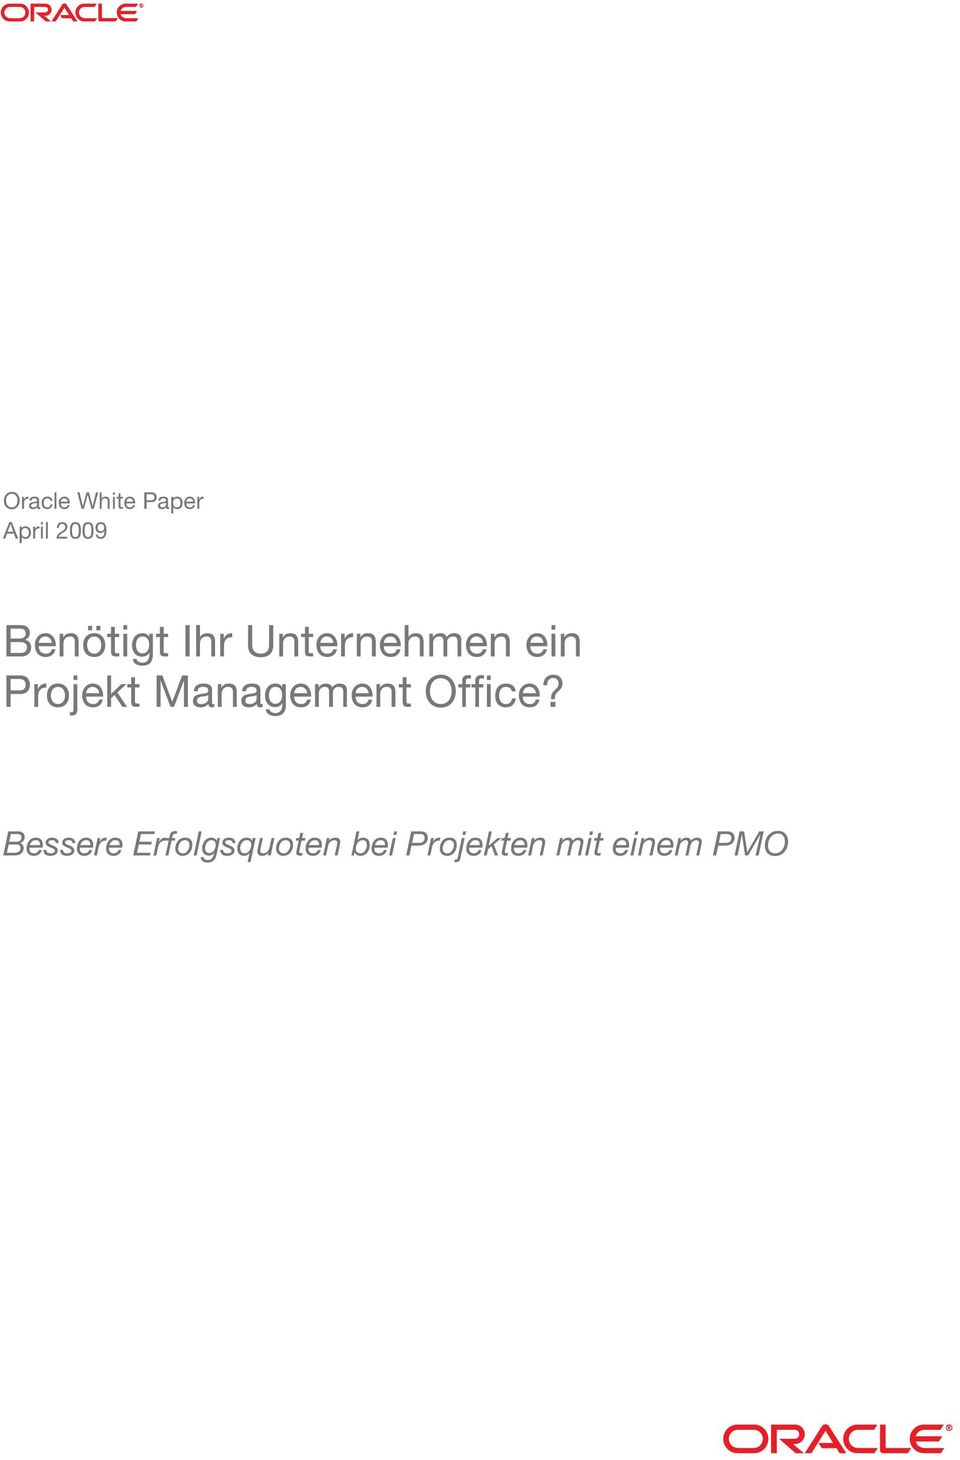 Projekt Management Office?